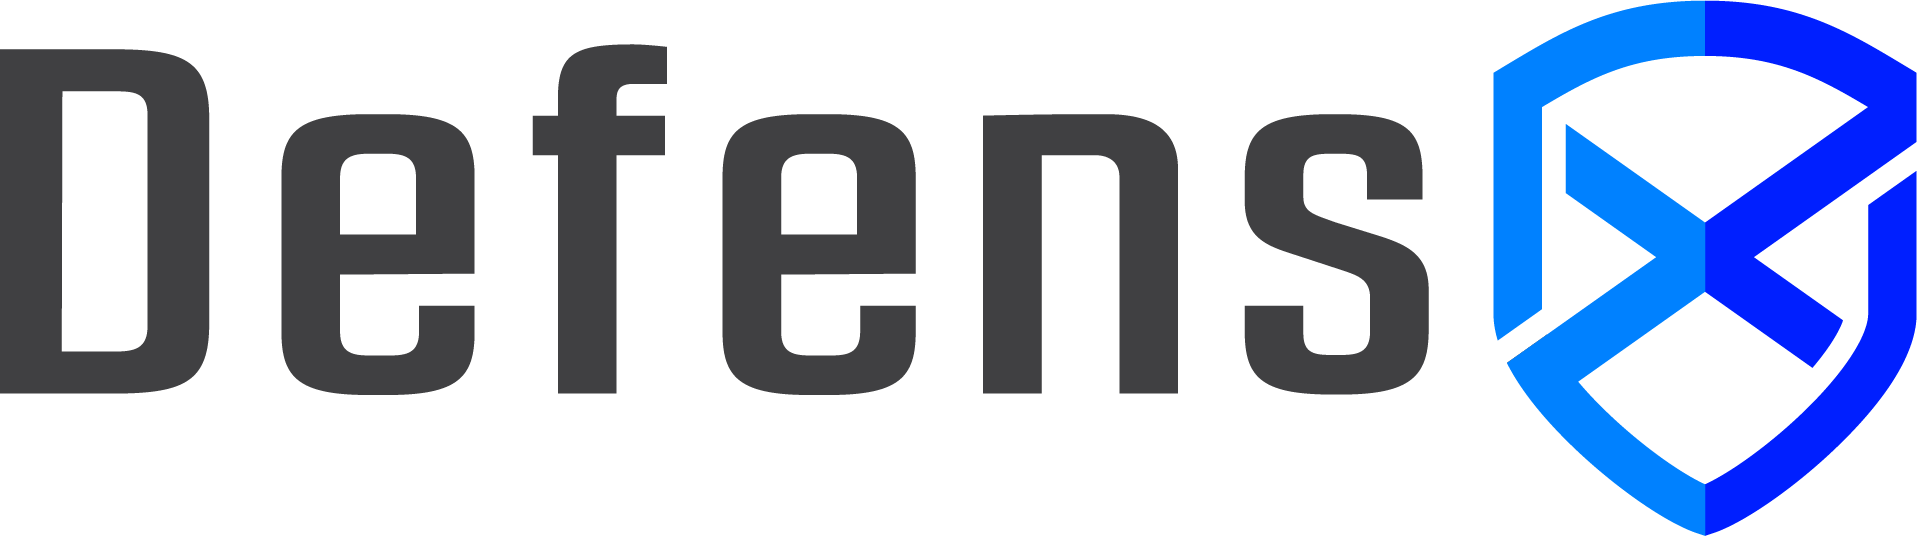 DefensX-Logo